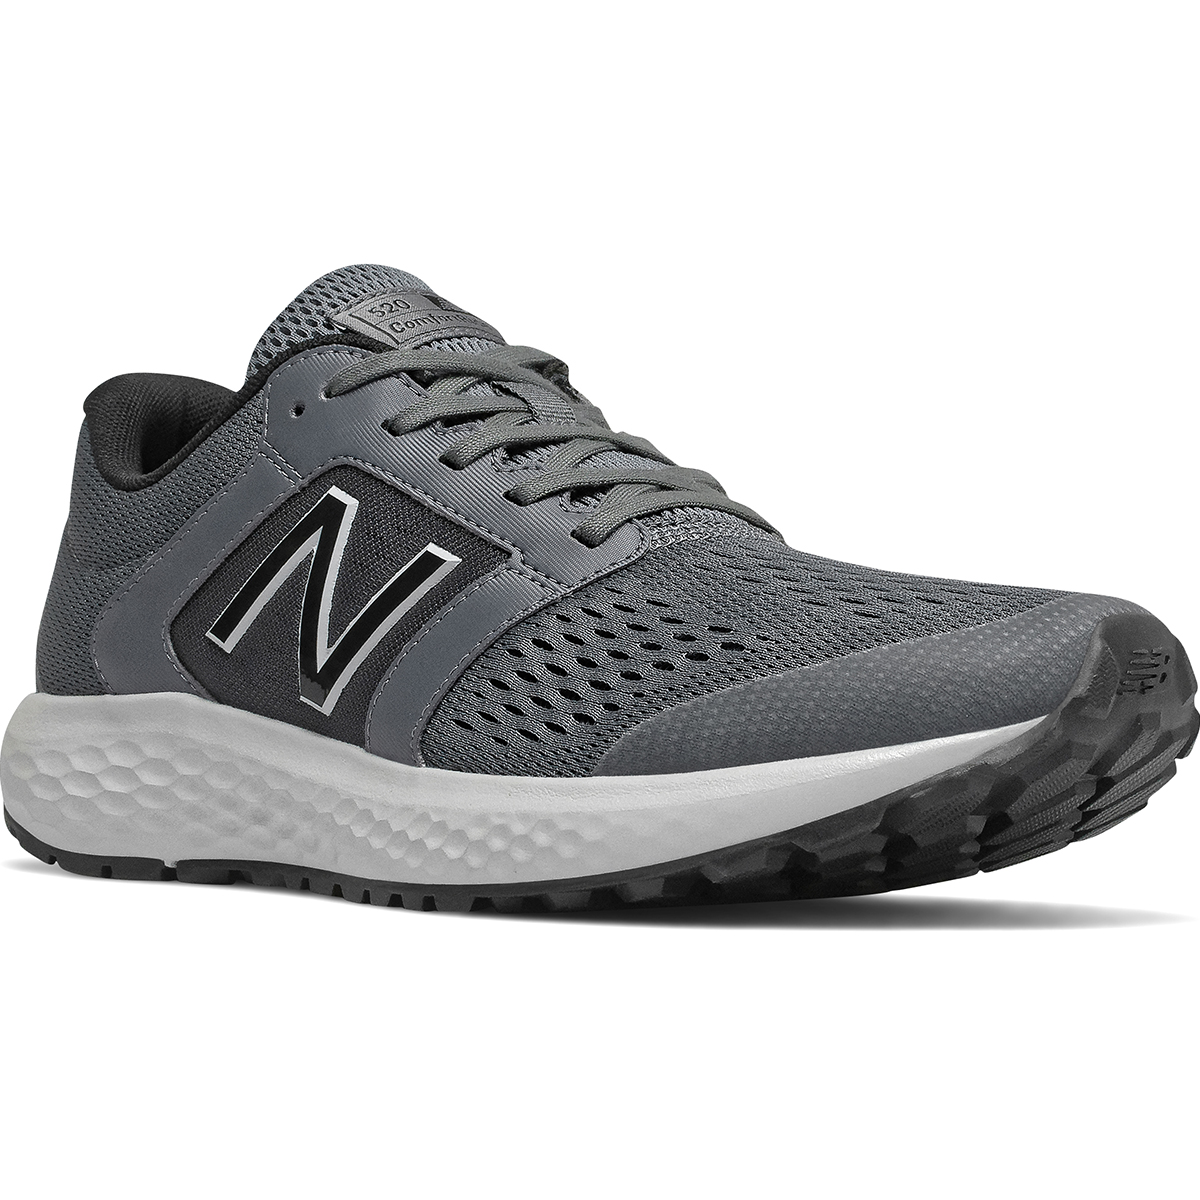 New Balance Men's 520 V5 Running Shoe, Wide - Black, 11.5